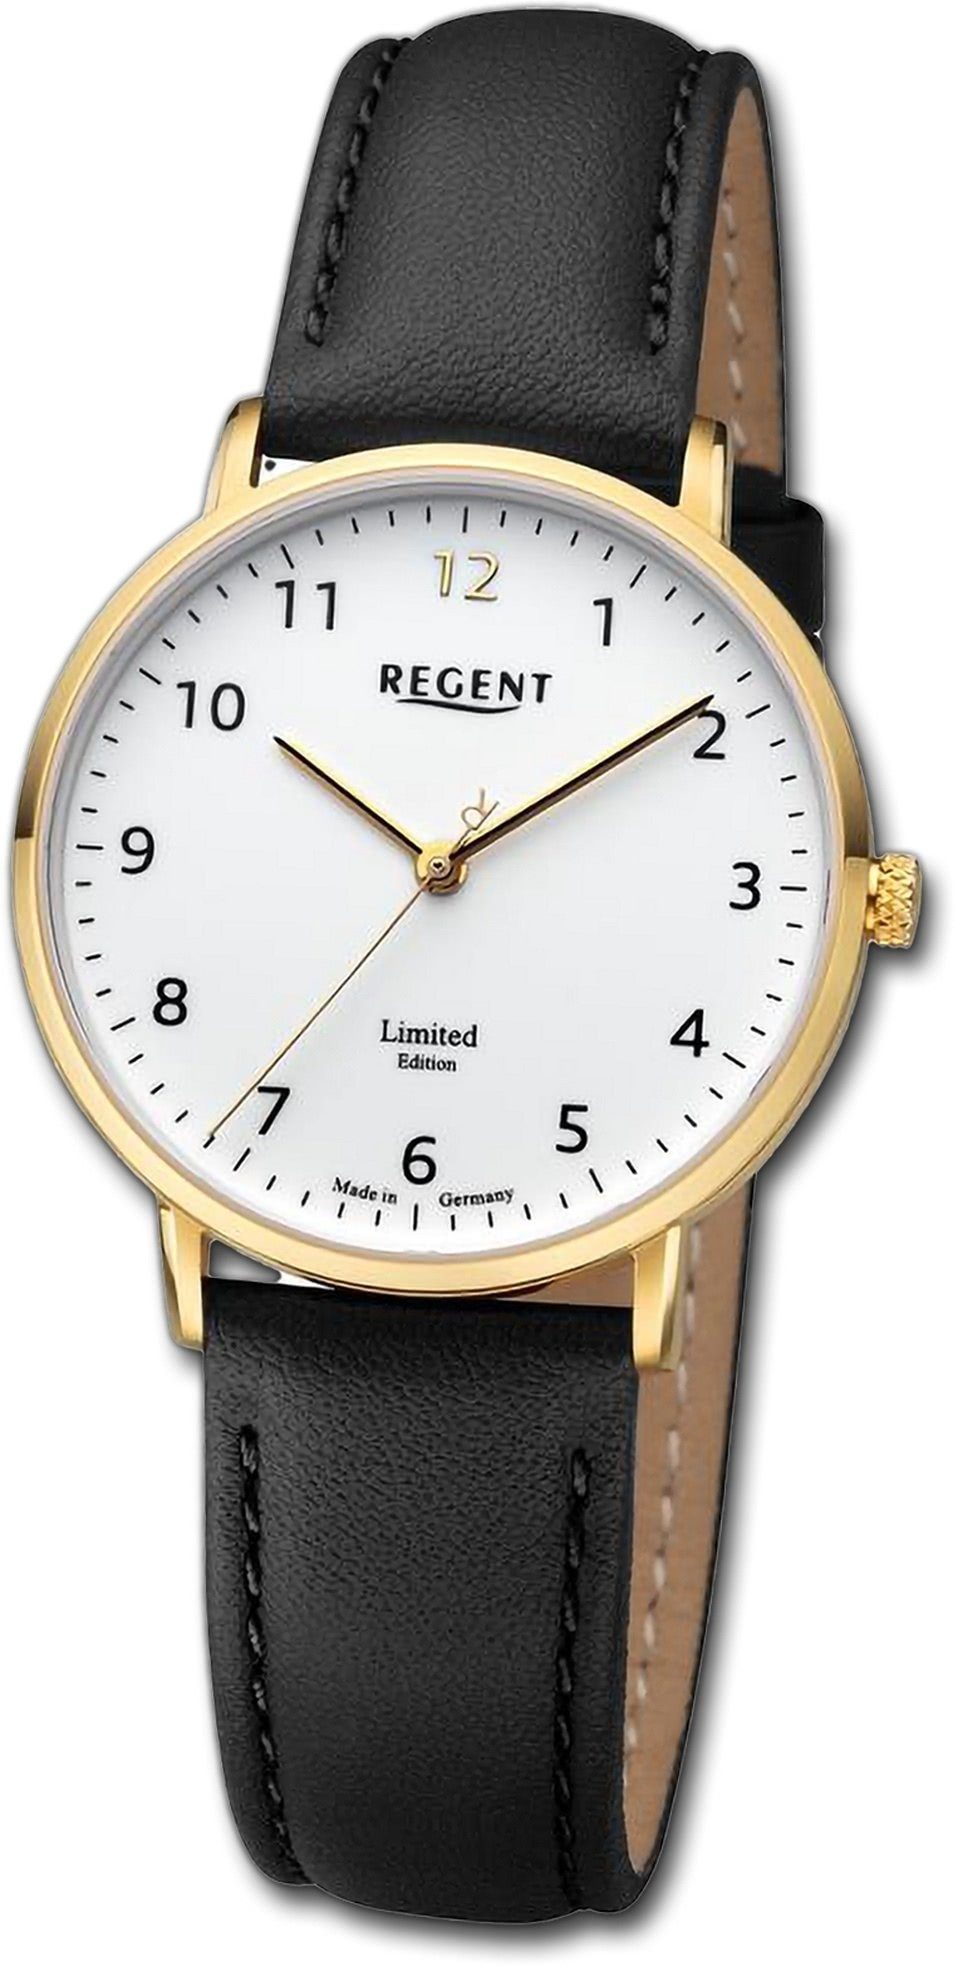 Analog, groß schwarz, Quarzuhr rundes Gehäuse, Regent Lederarmband Damenuhr Armbanduhr 32mm) Damen Regent (ca. extra